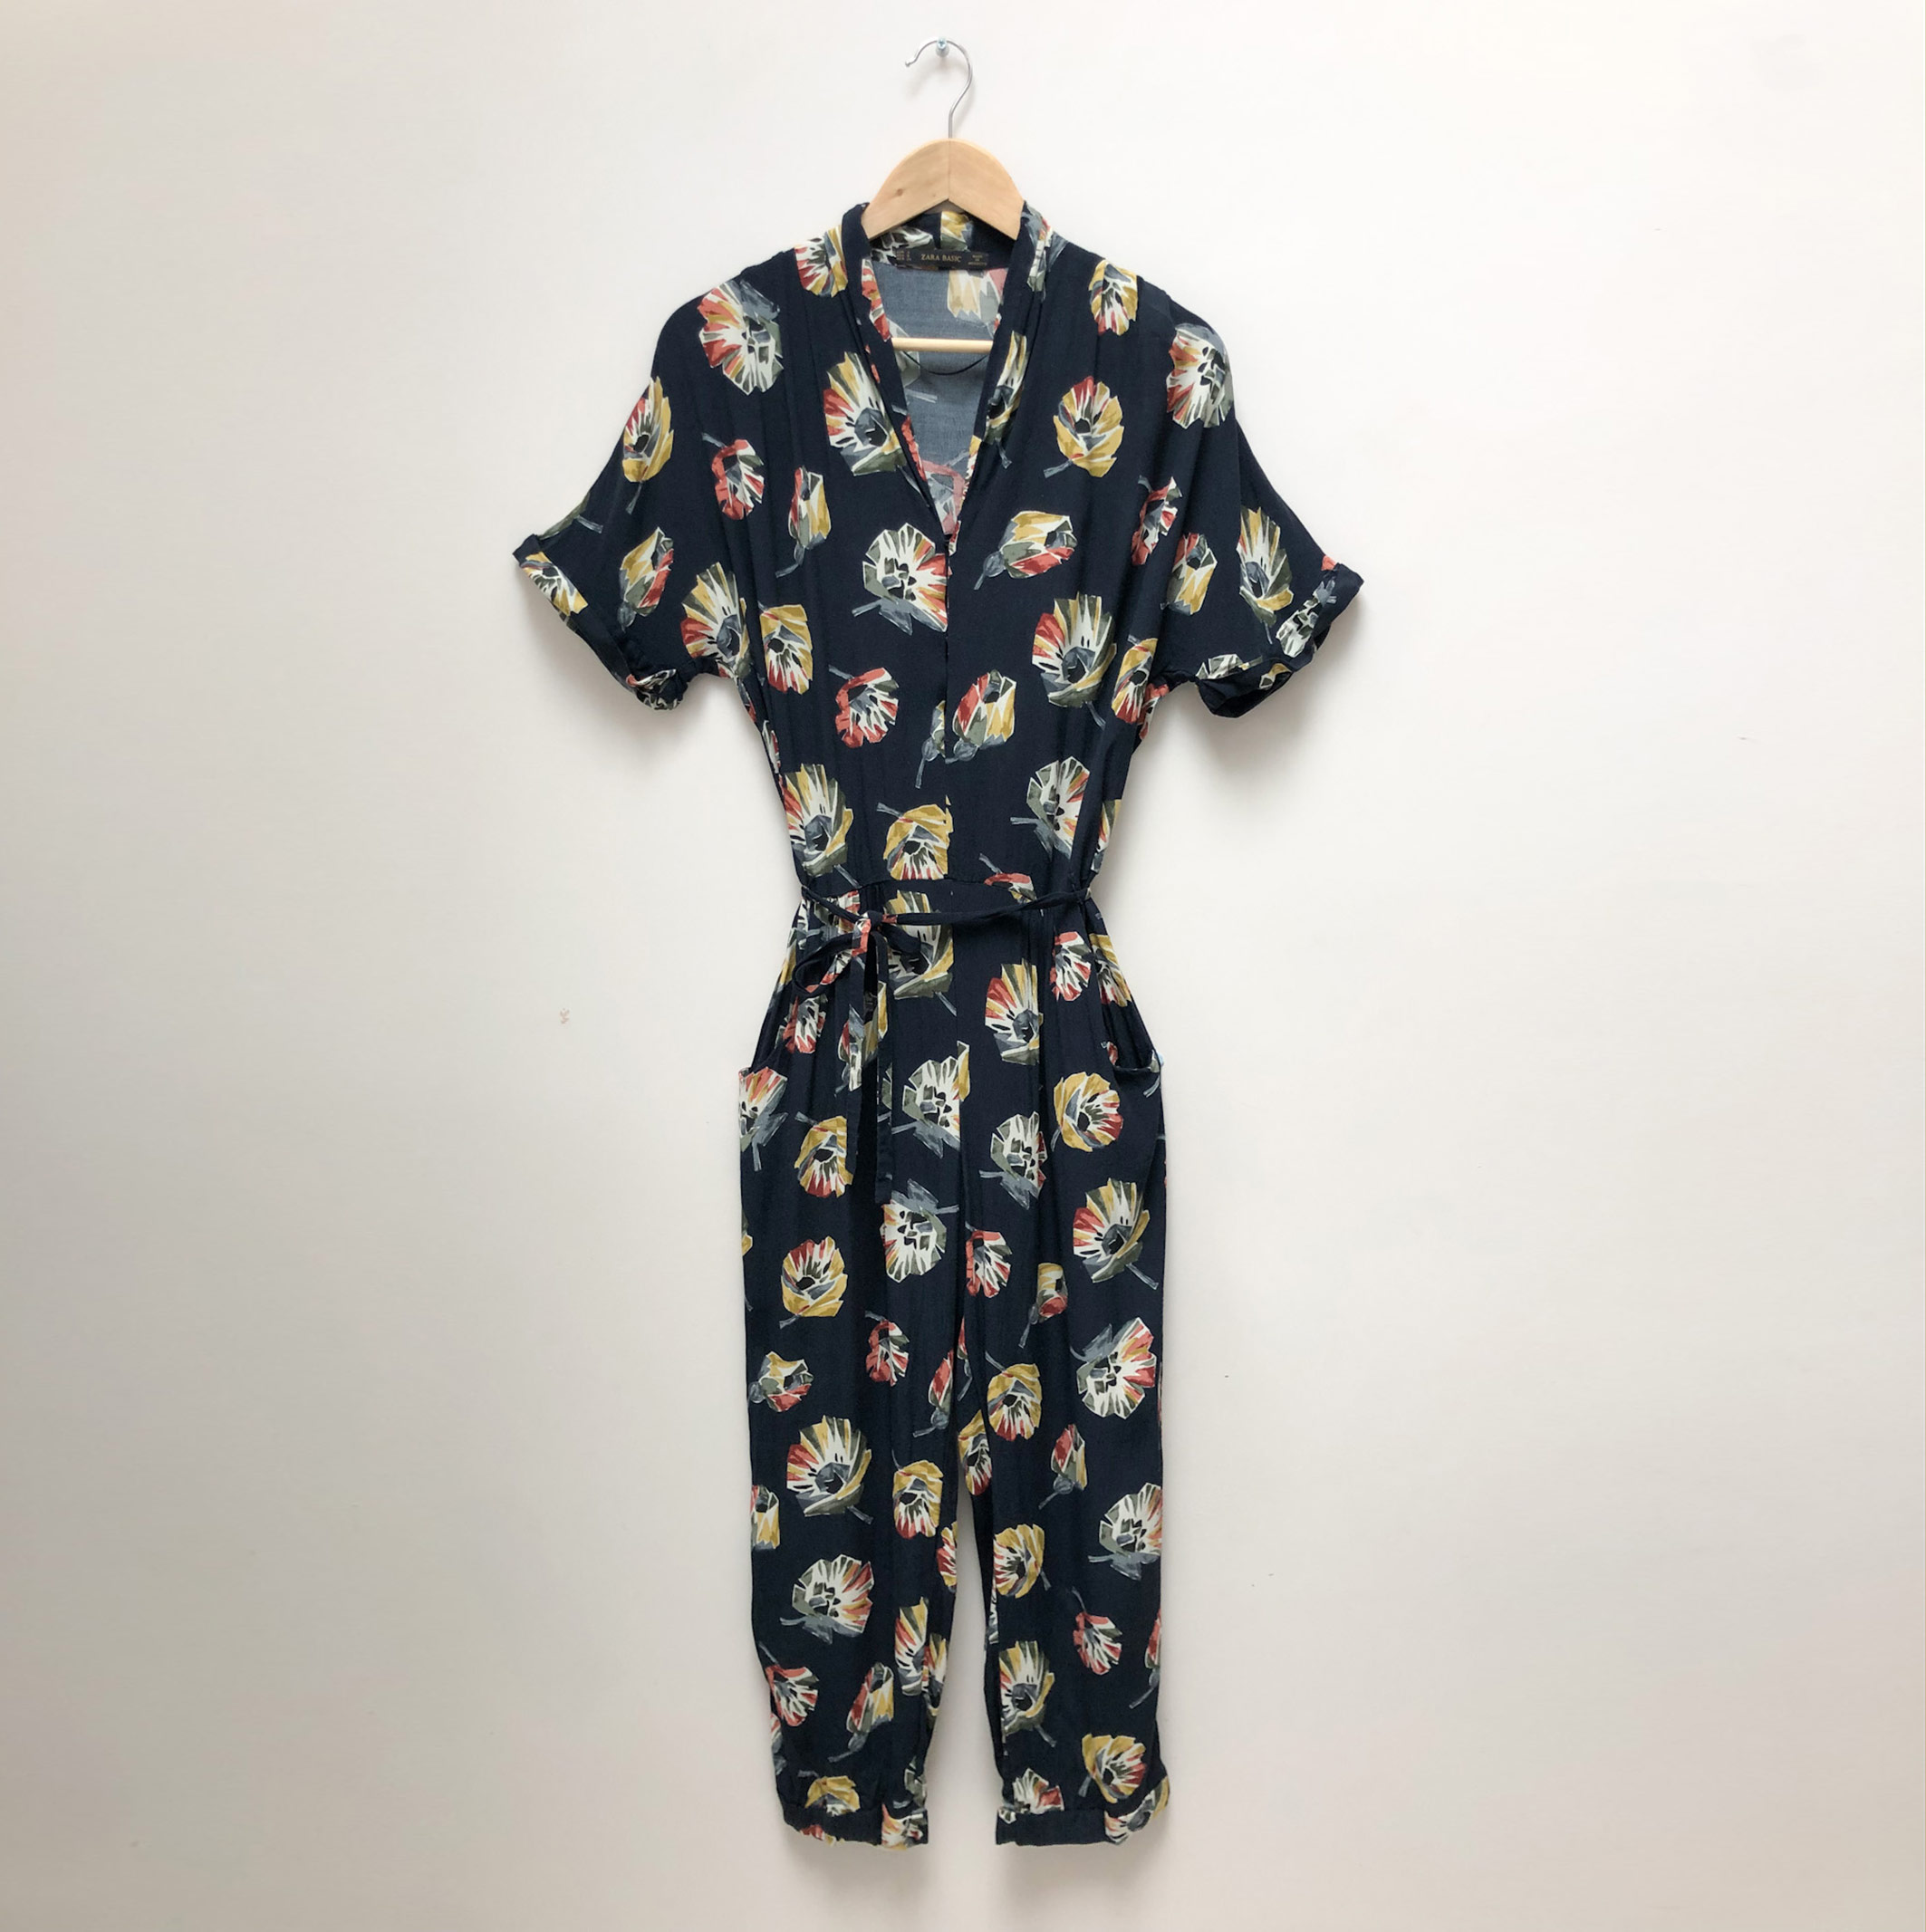 Zara navy floral jumpsuit